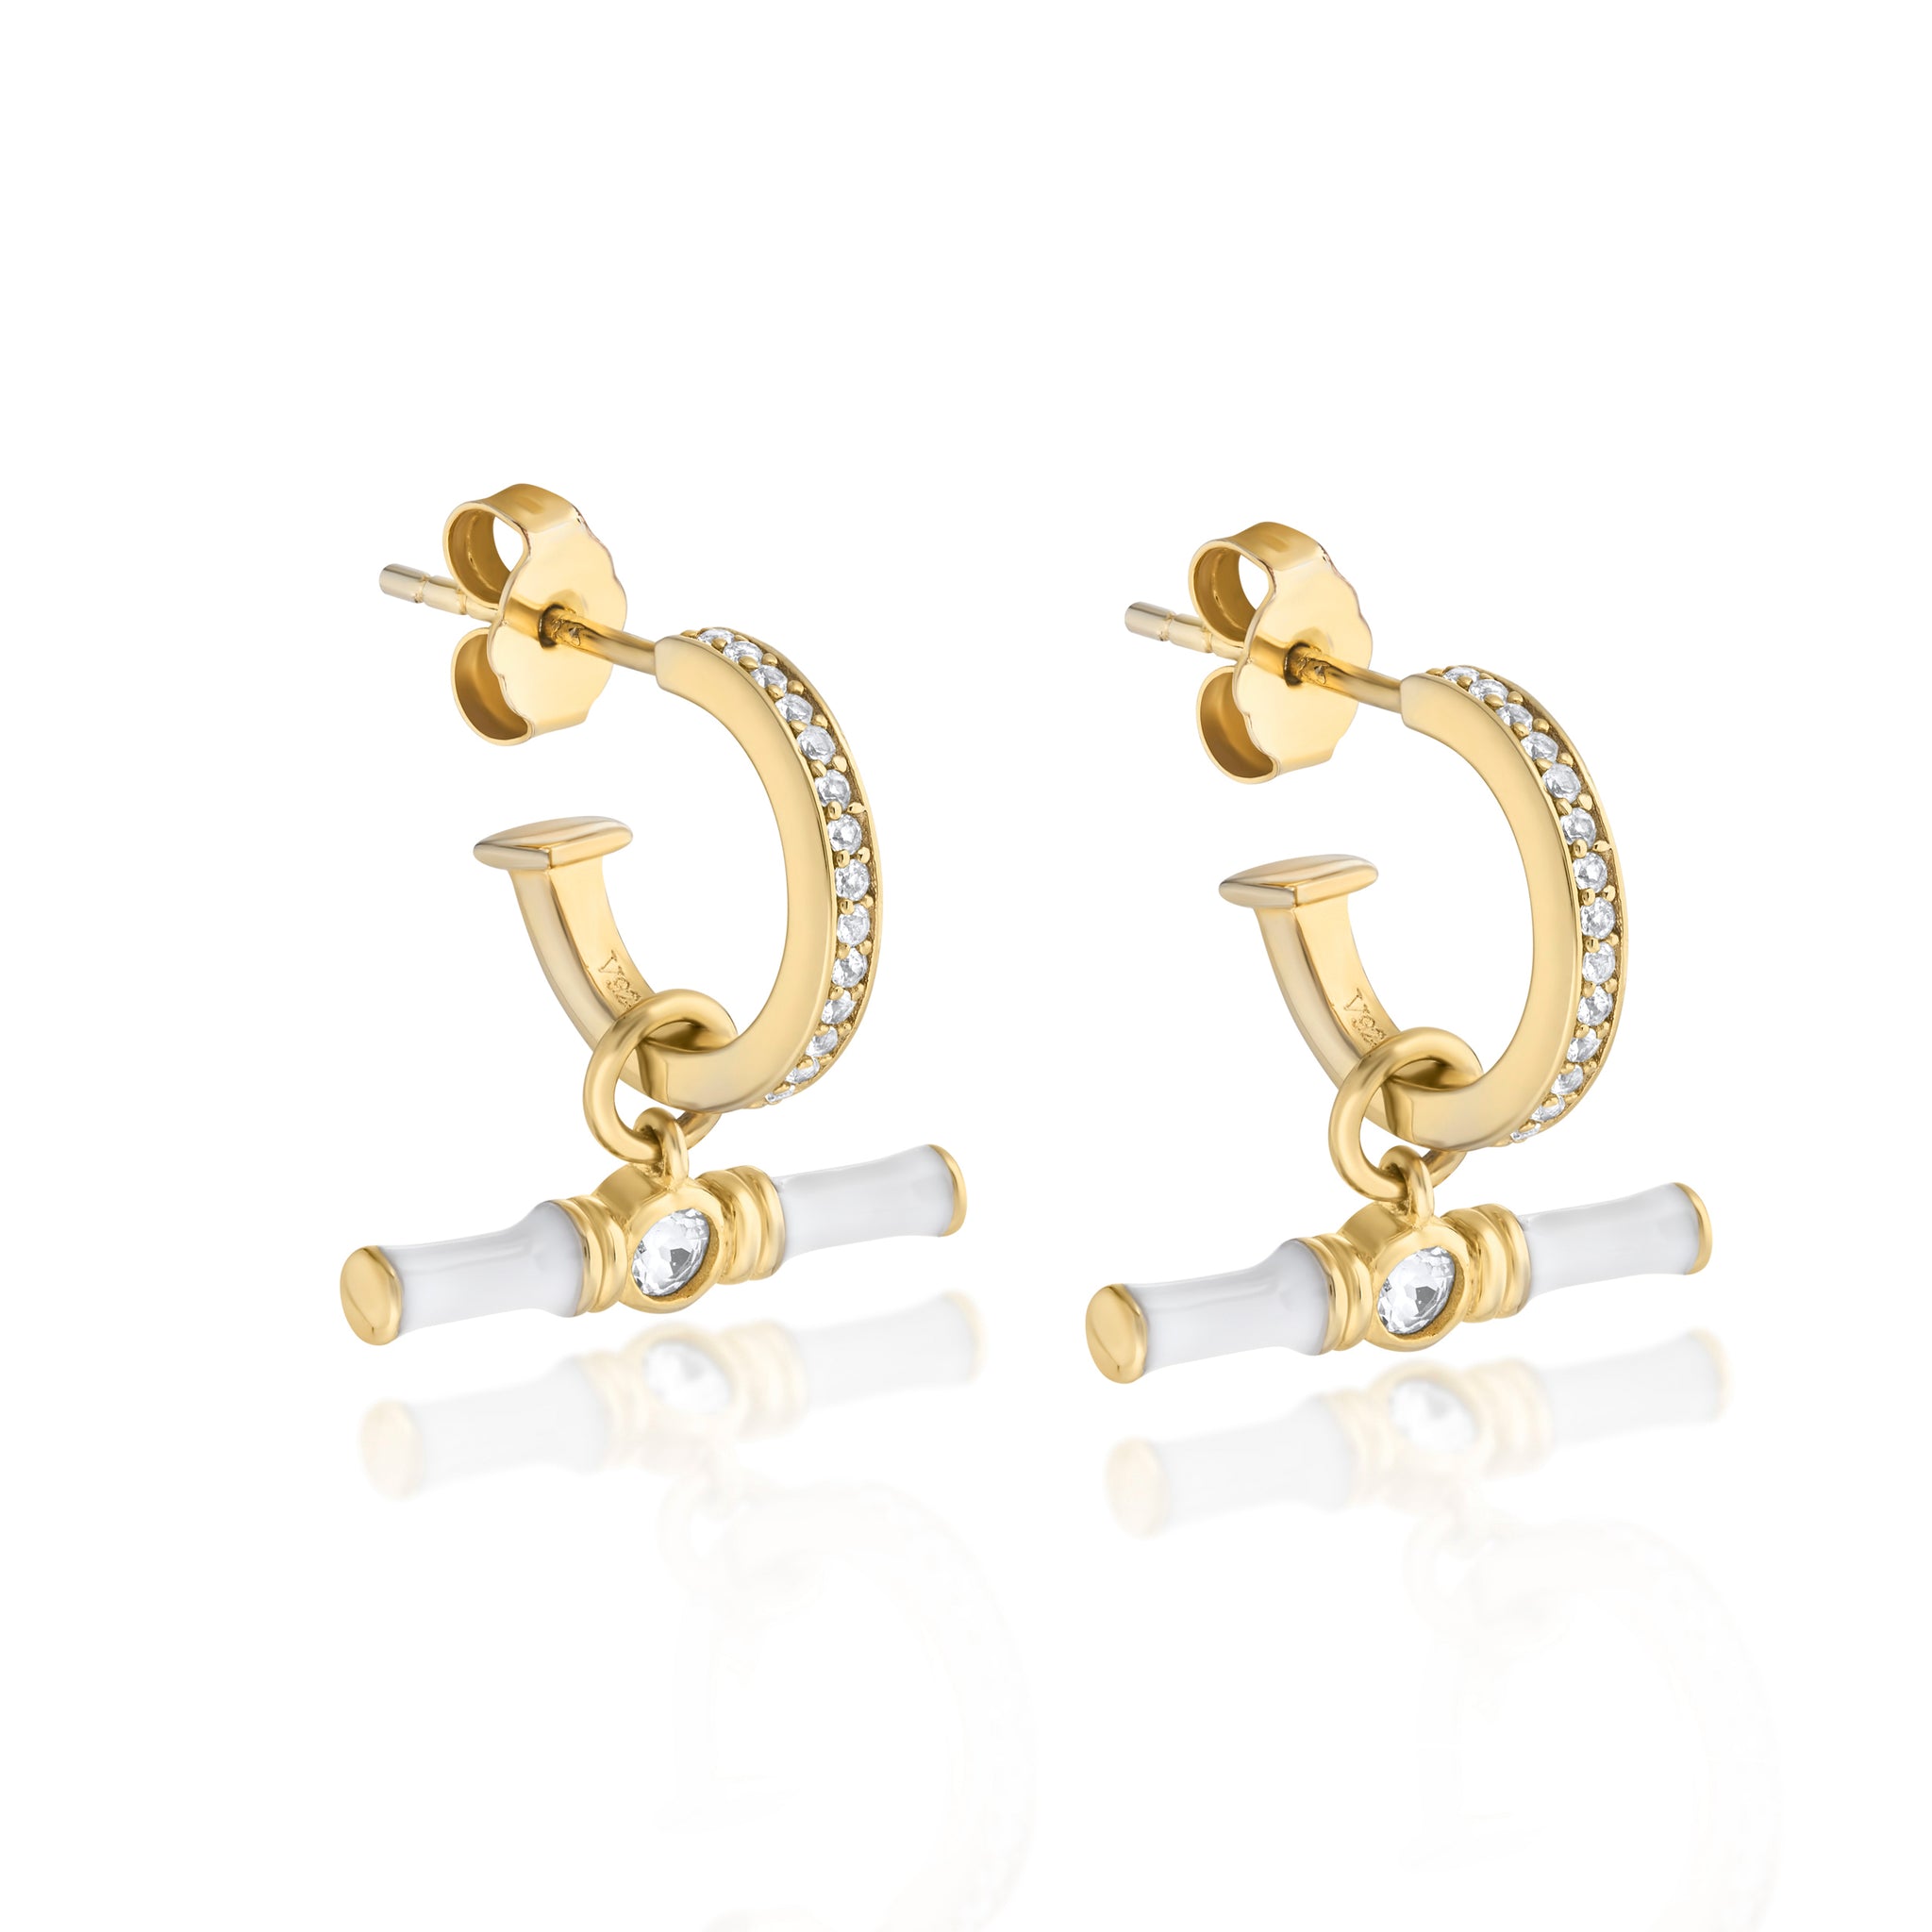 Dyllan Hoop Earrings + White Enamel T-Bar Charms